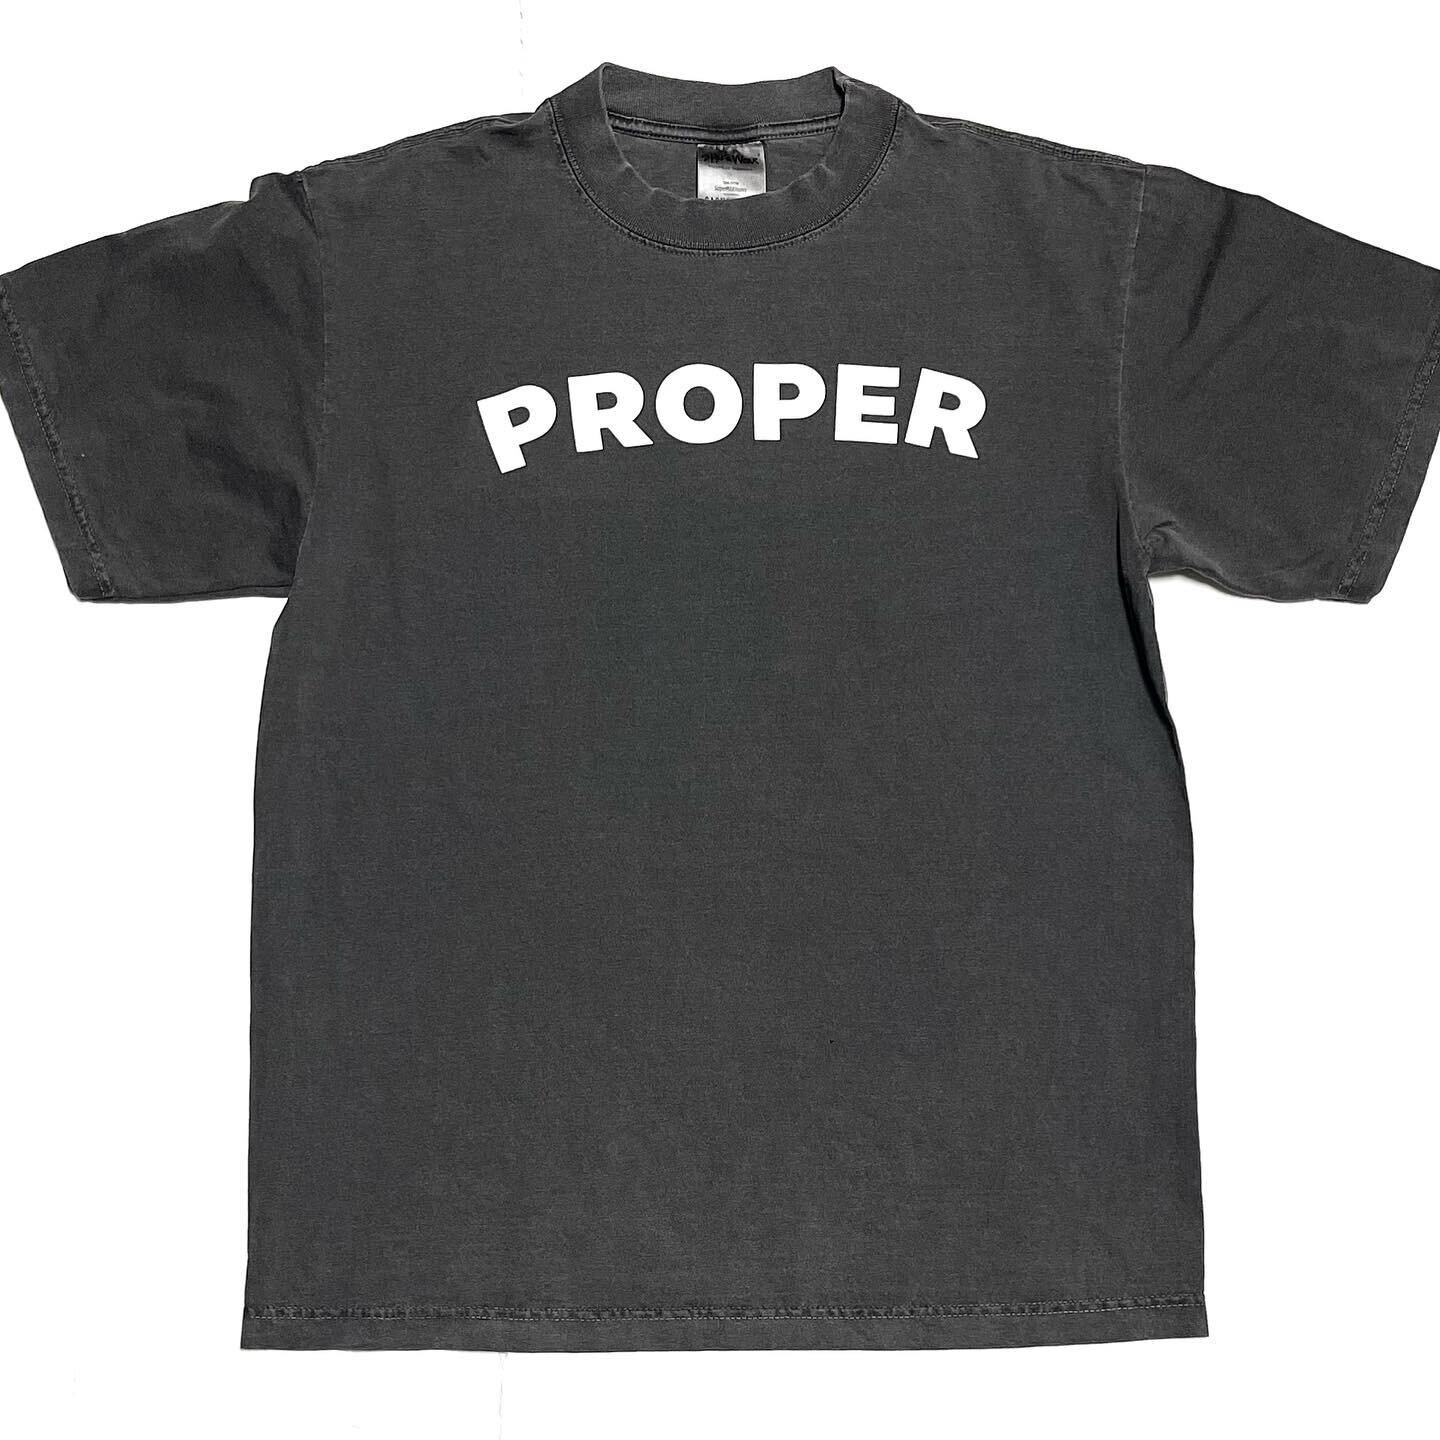 Limited stock 🔥 

#proper#propercuts#sanjose